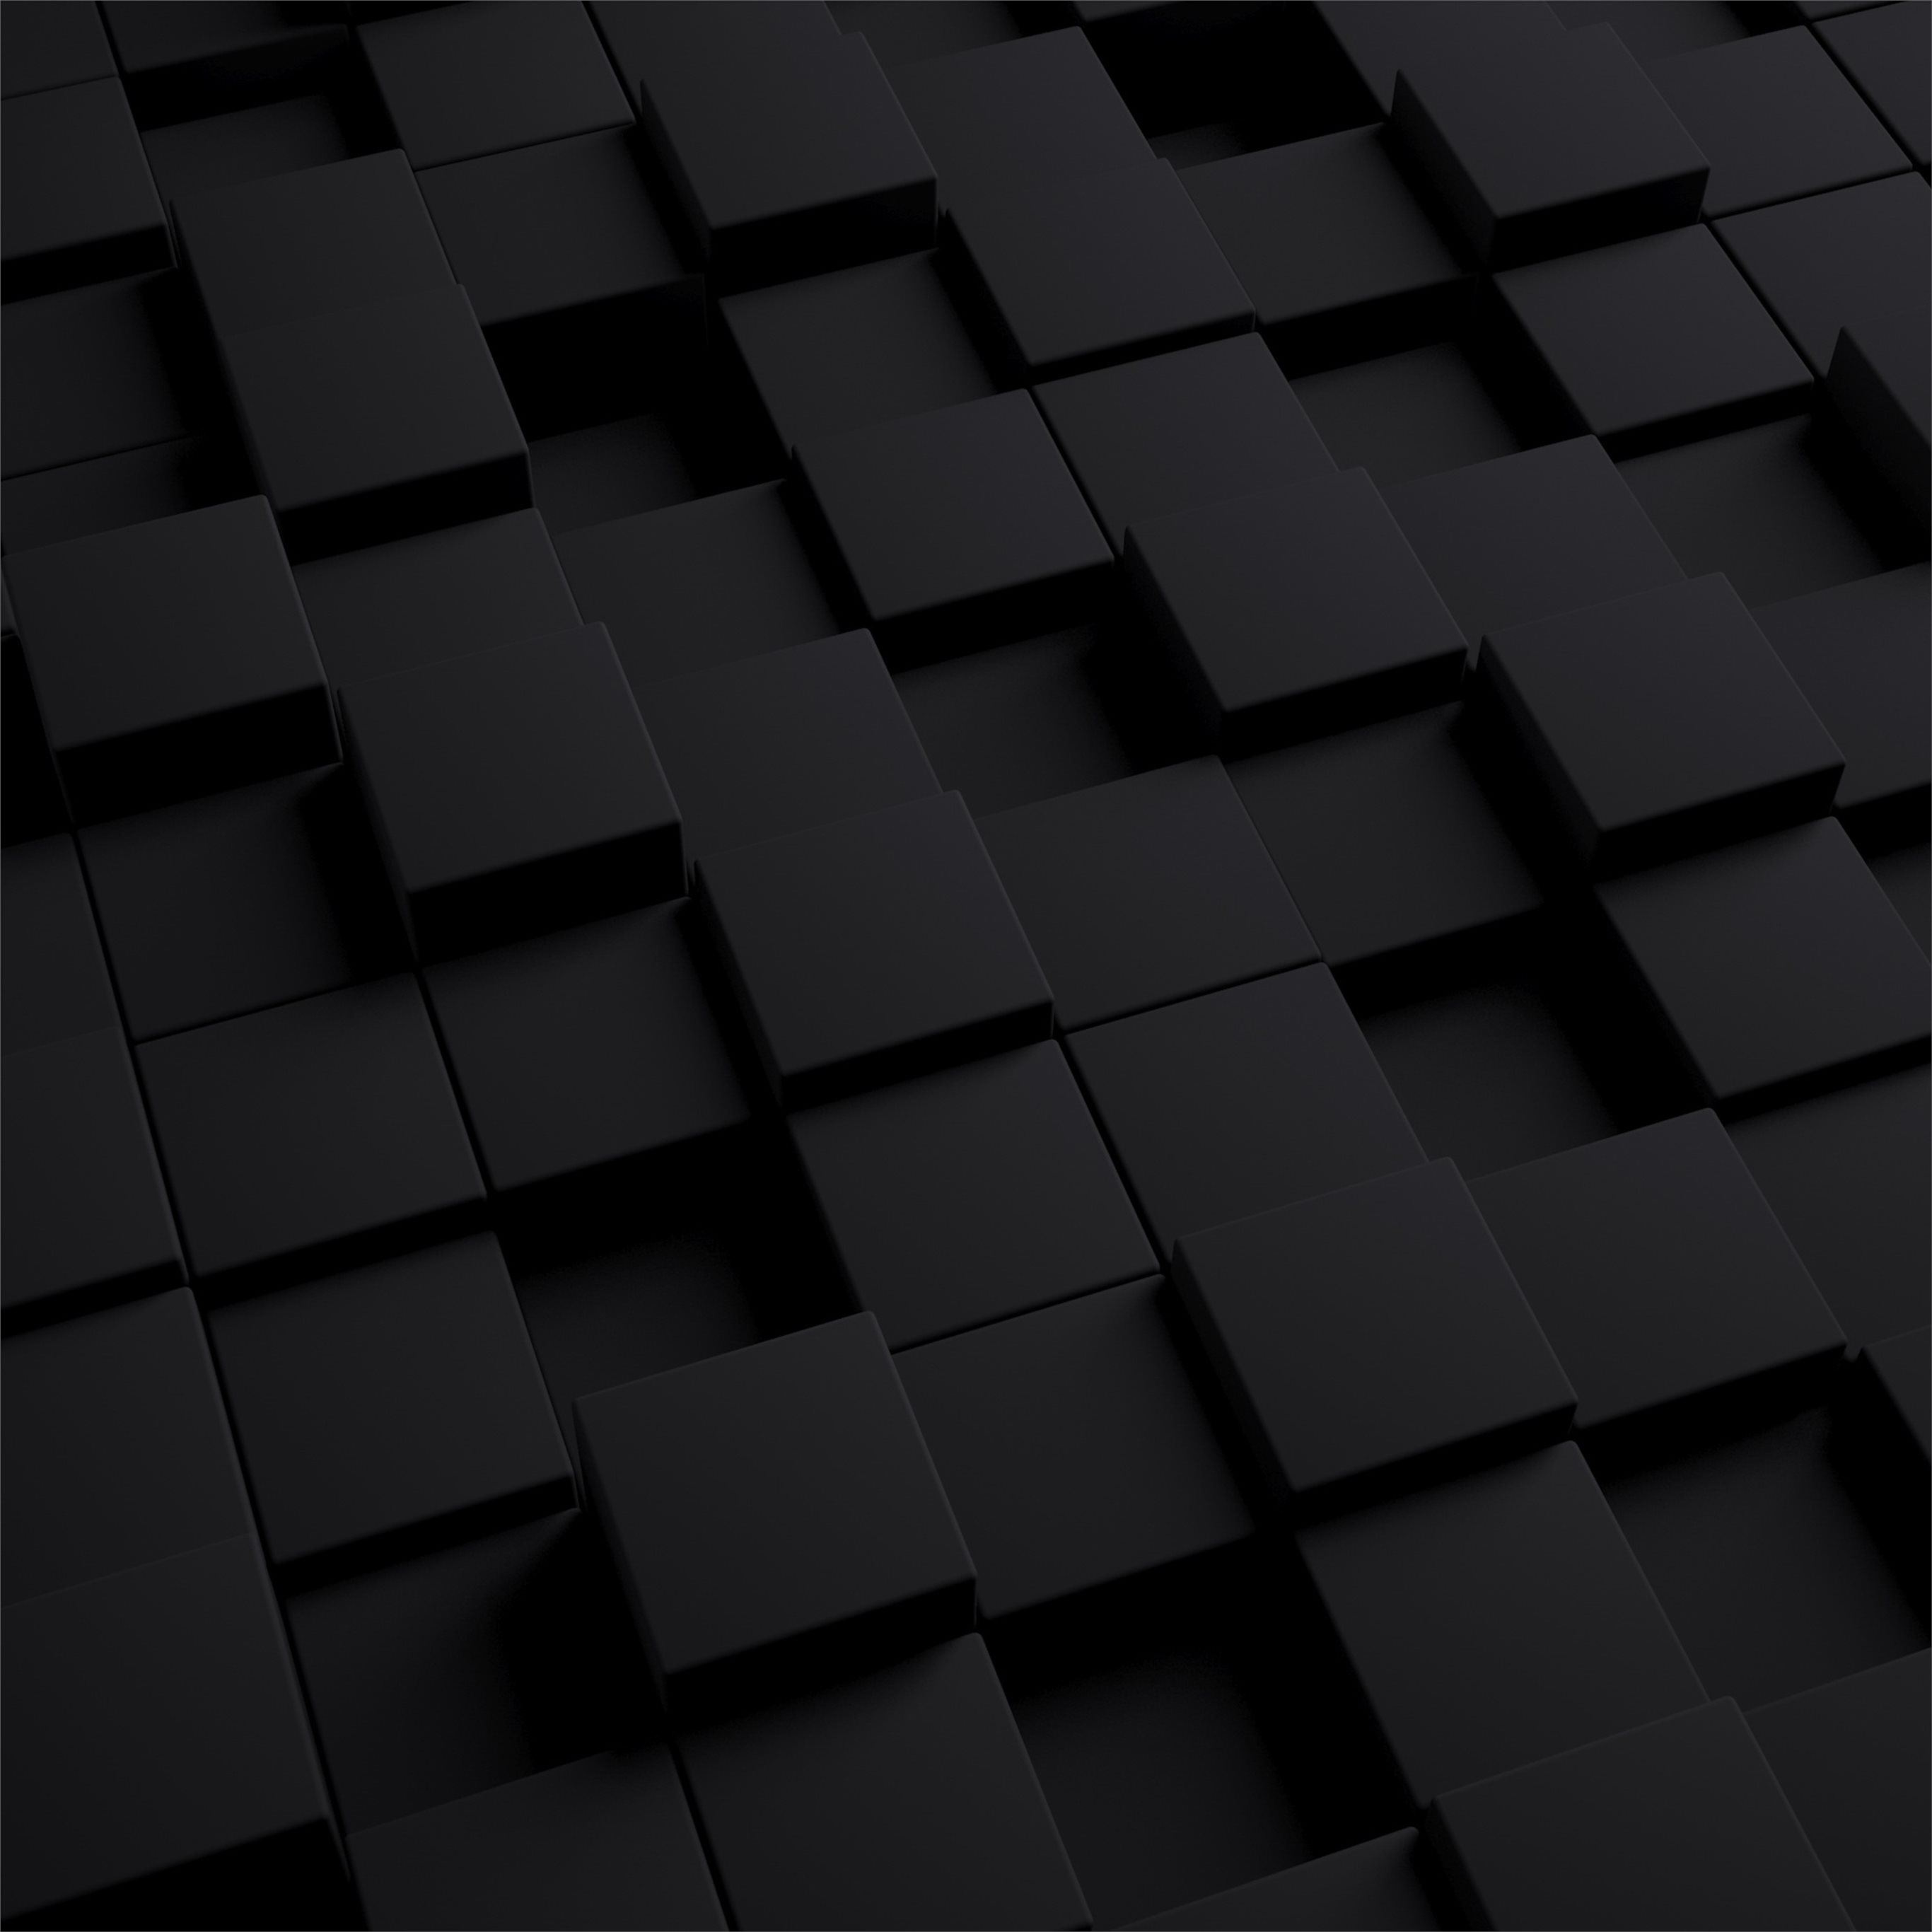 3d Black Cube Wallpaper Iphone Image Num 10